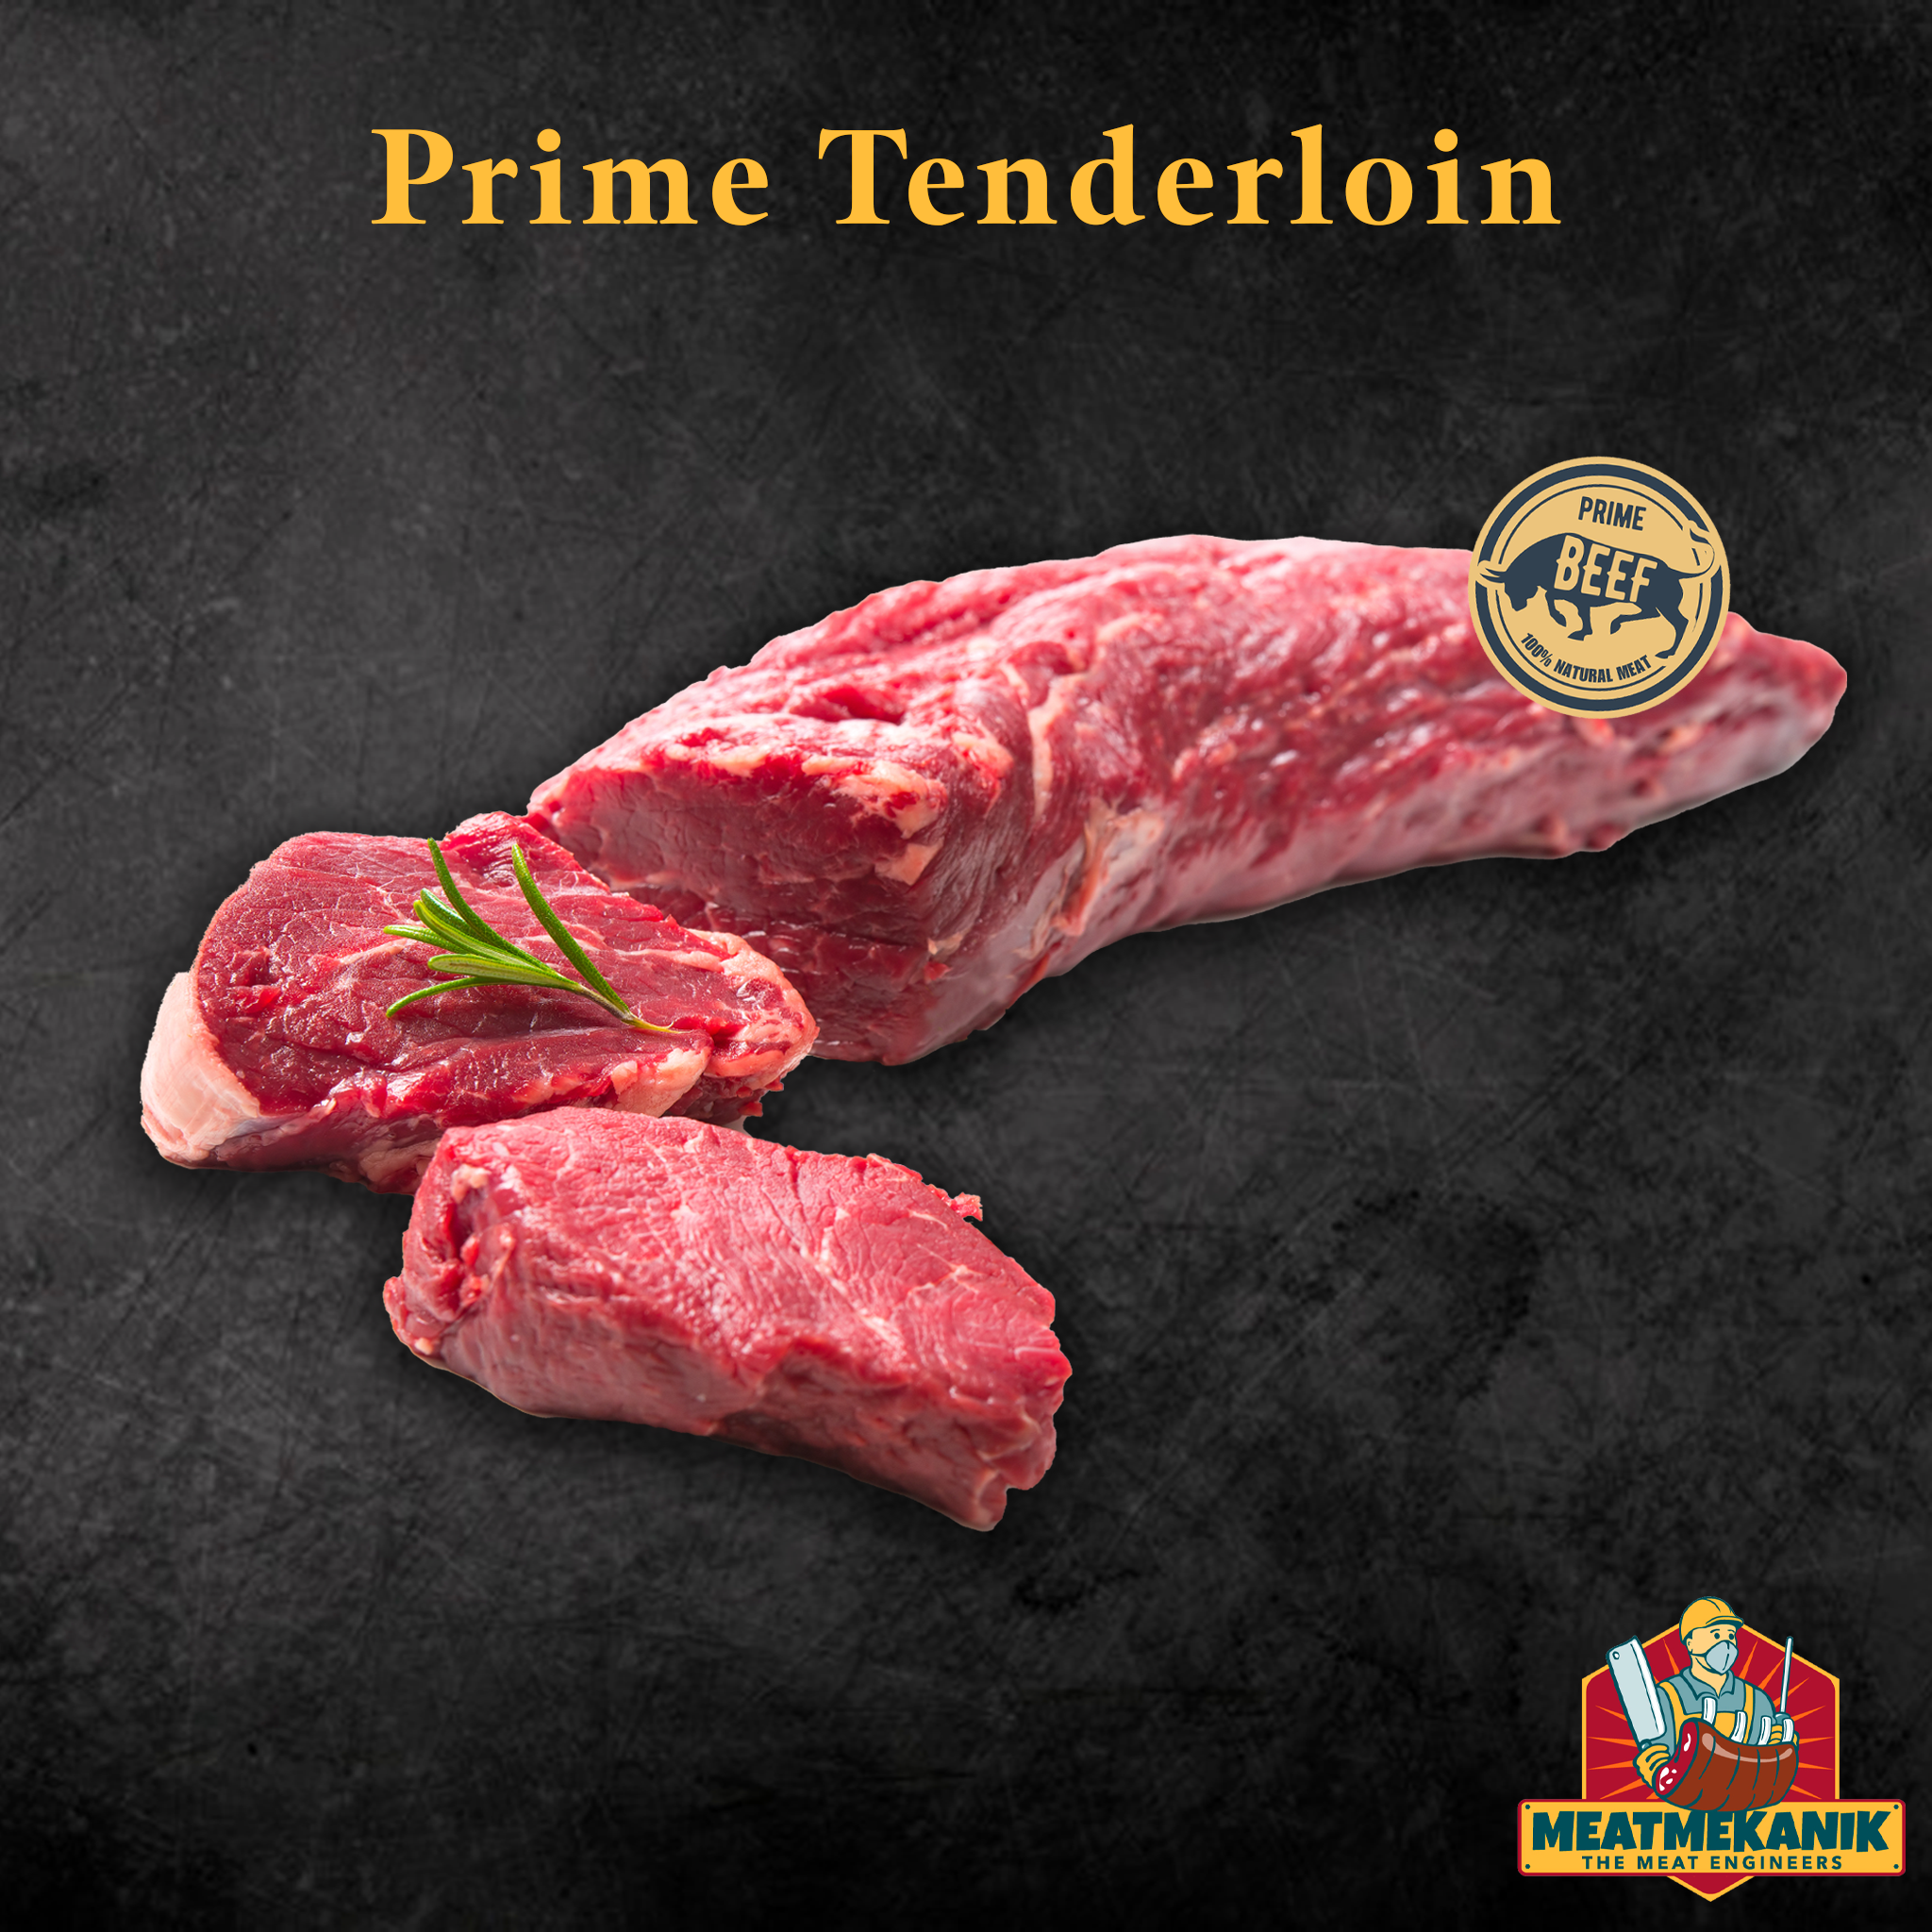 Prime Tenderloin - Meat Mekanik